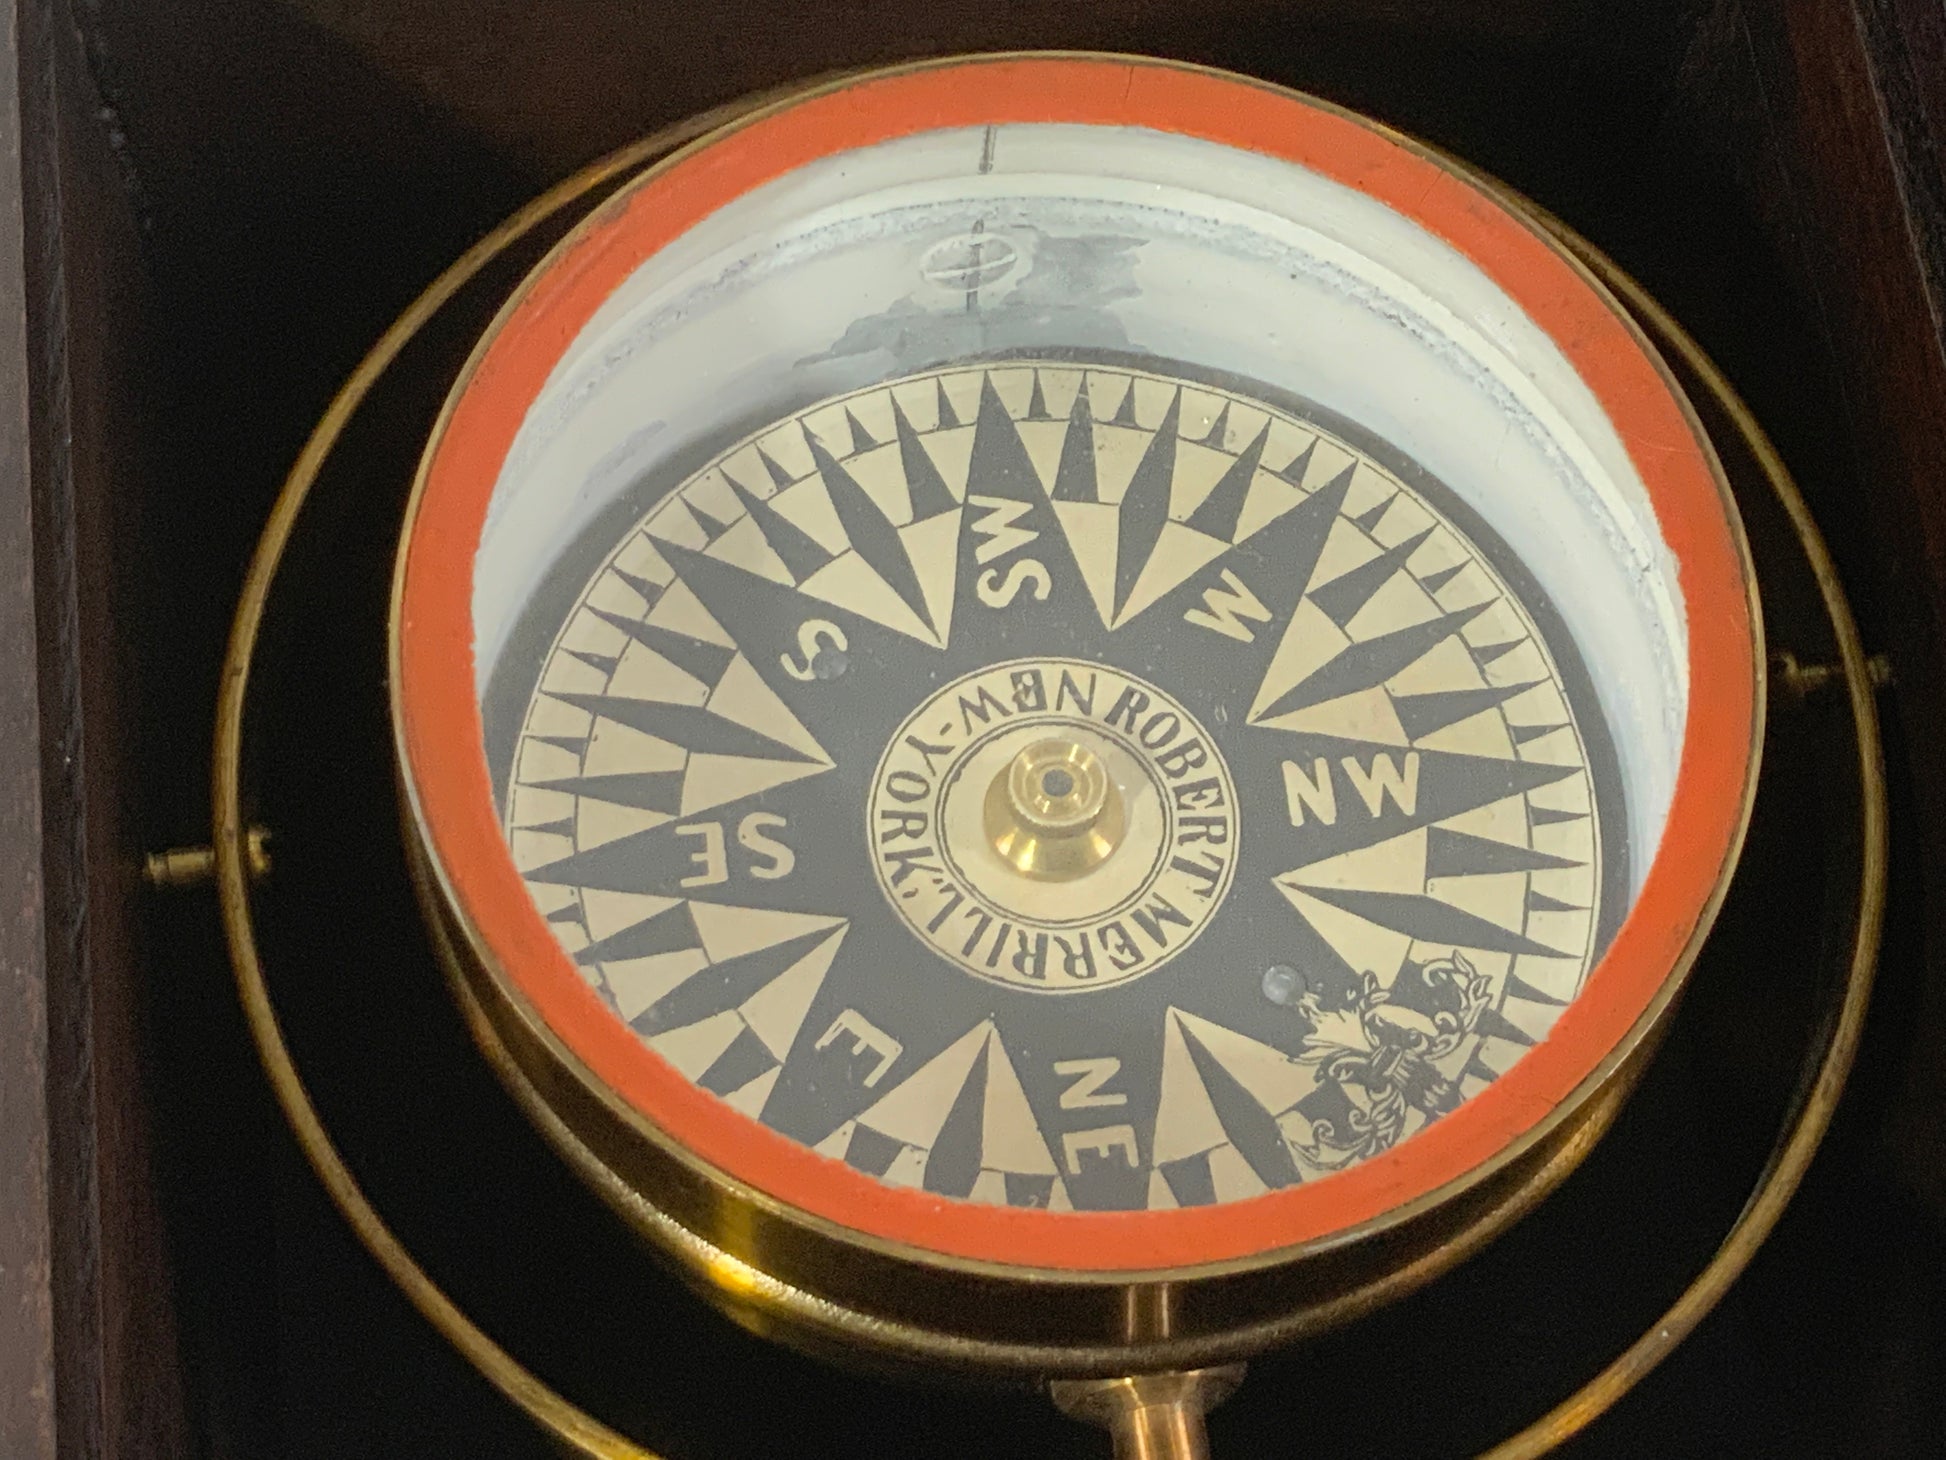 Ships Compass from Robert Merrill of New York - Lannan Gallery